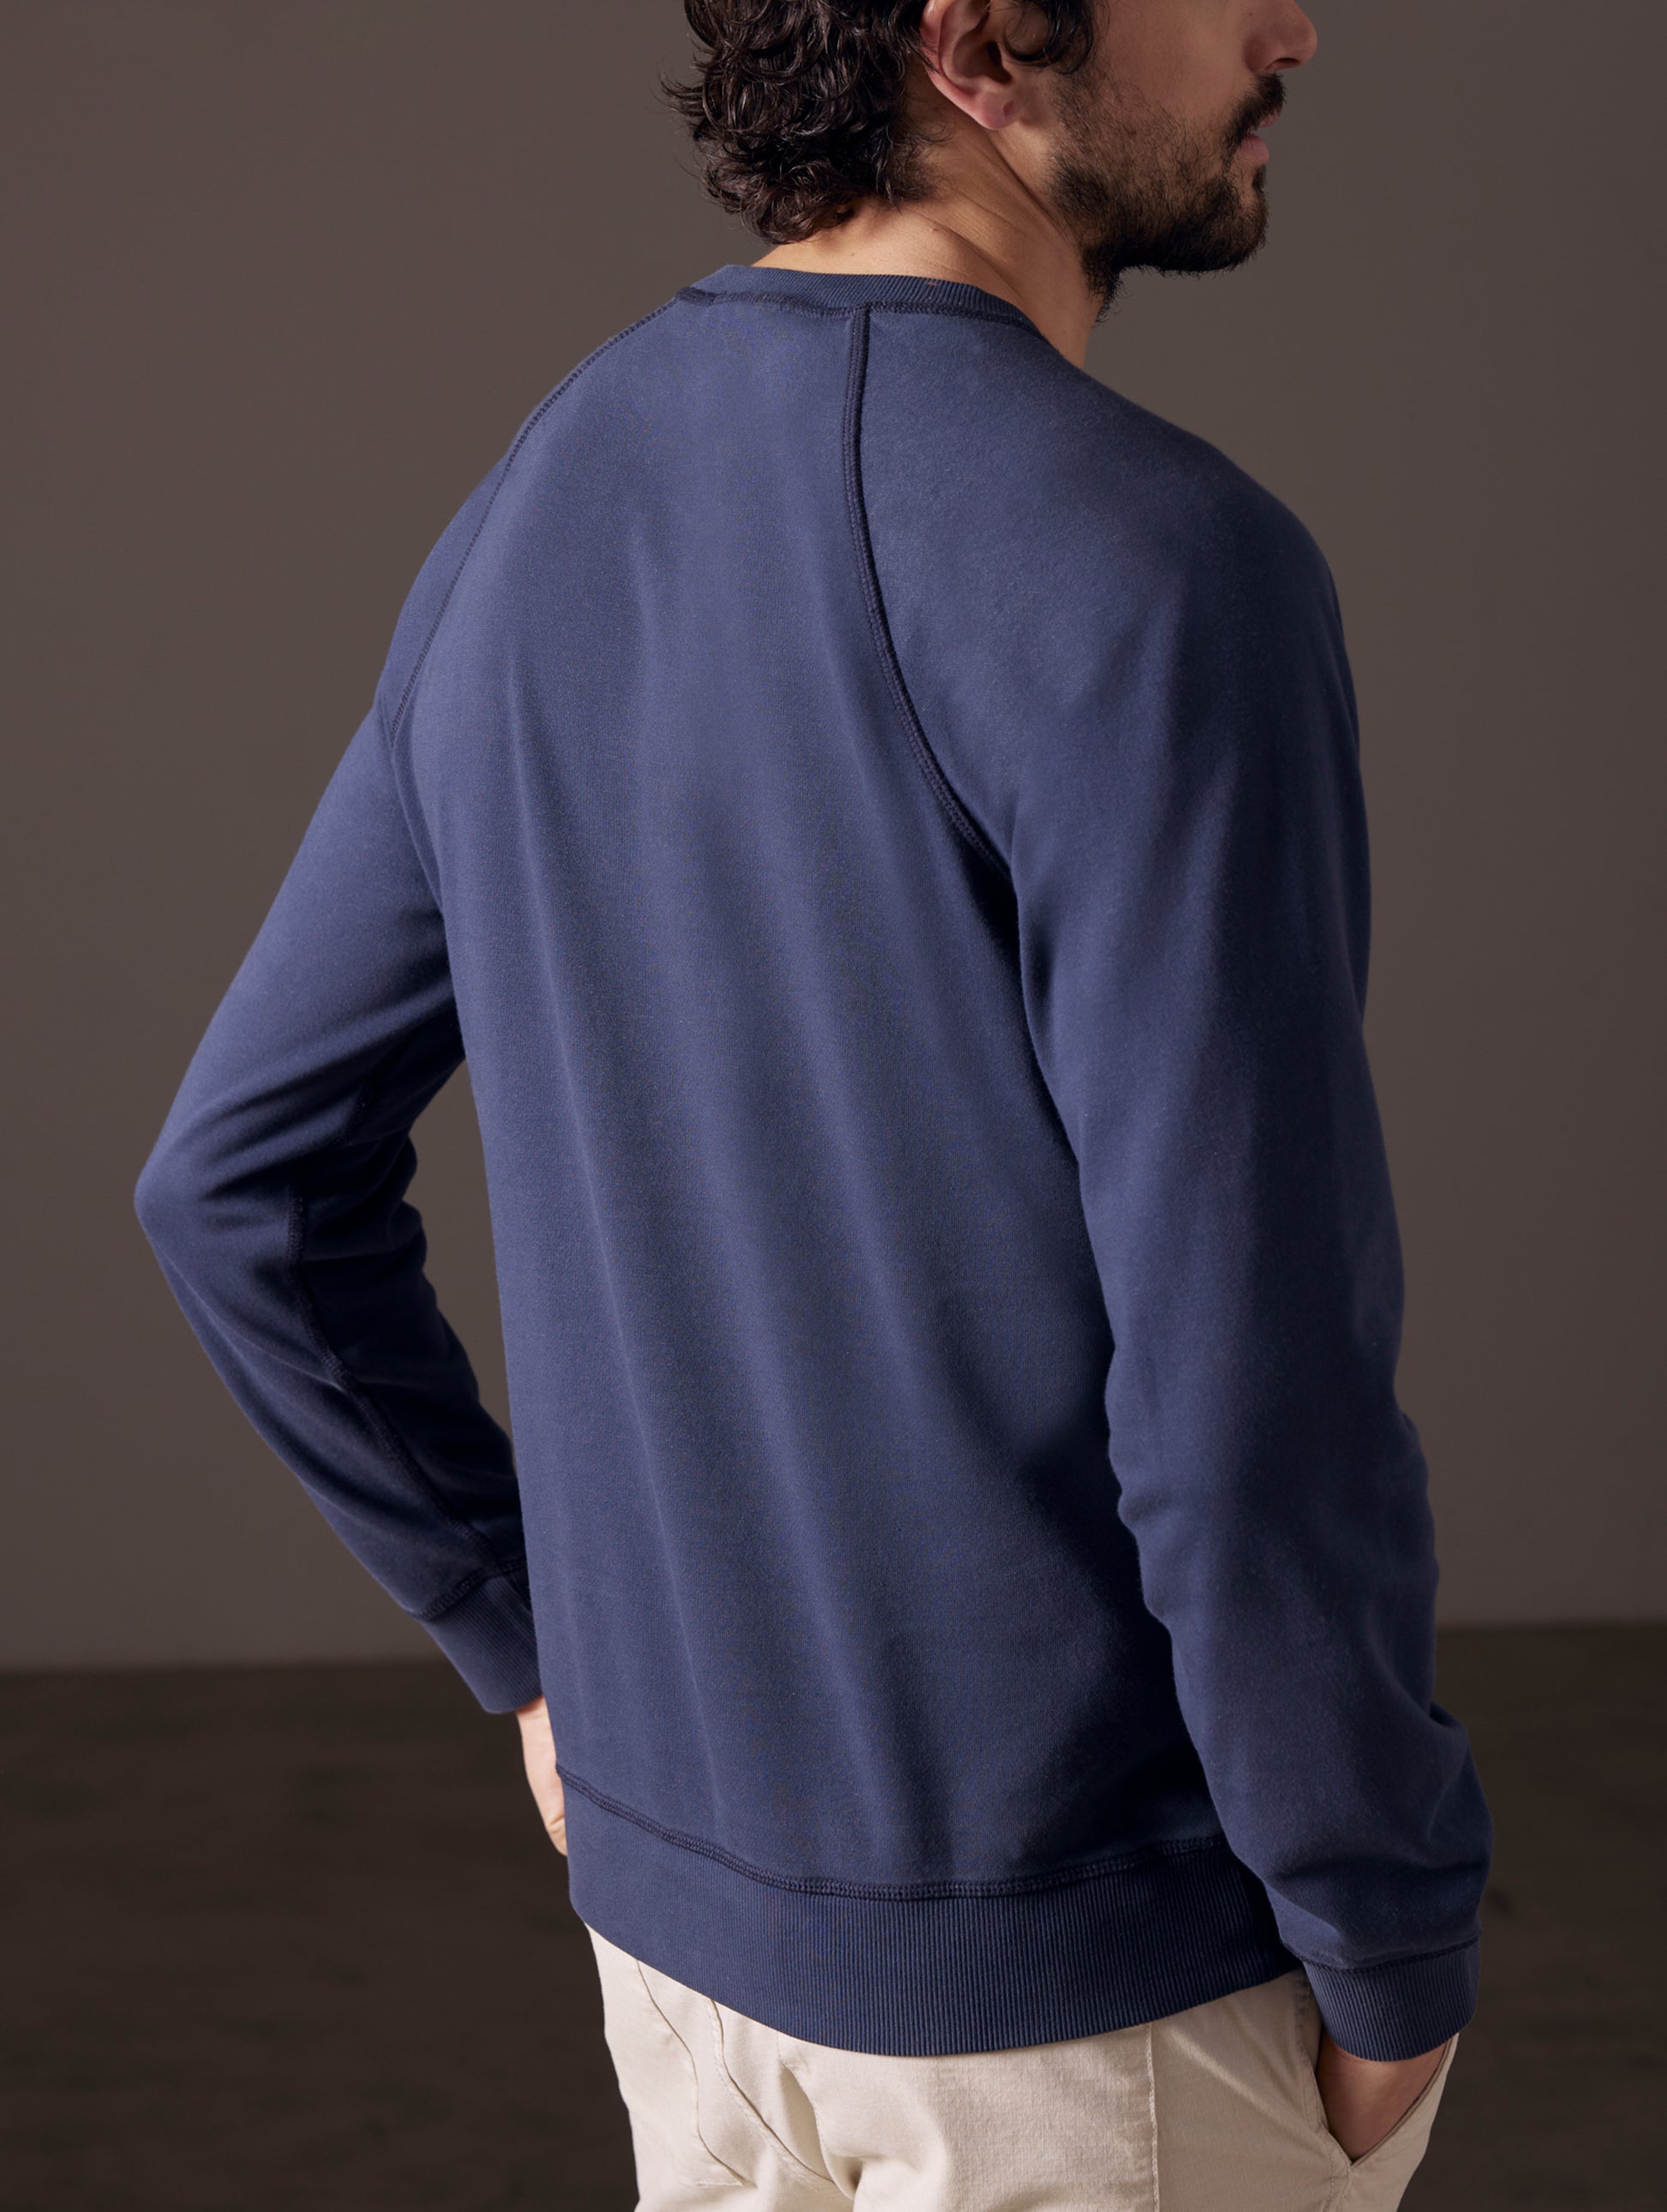 Back view of man wearing blue crew sweatshirt